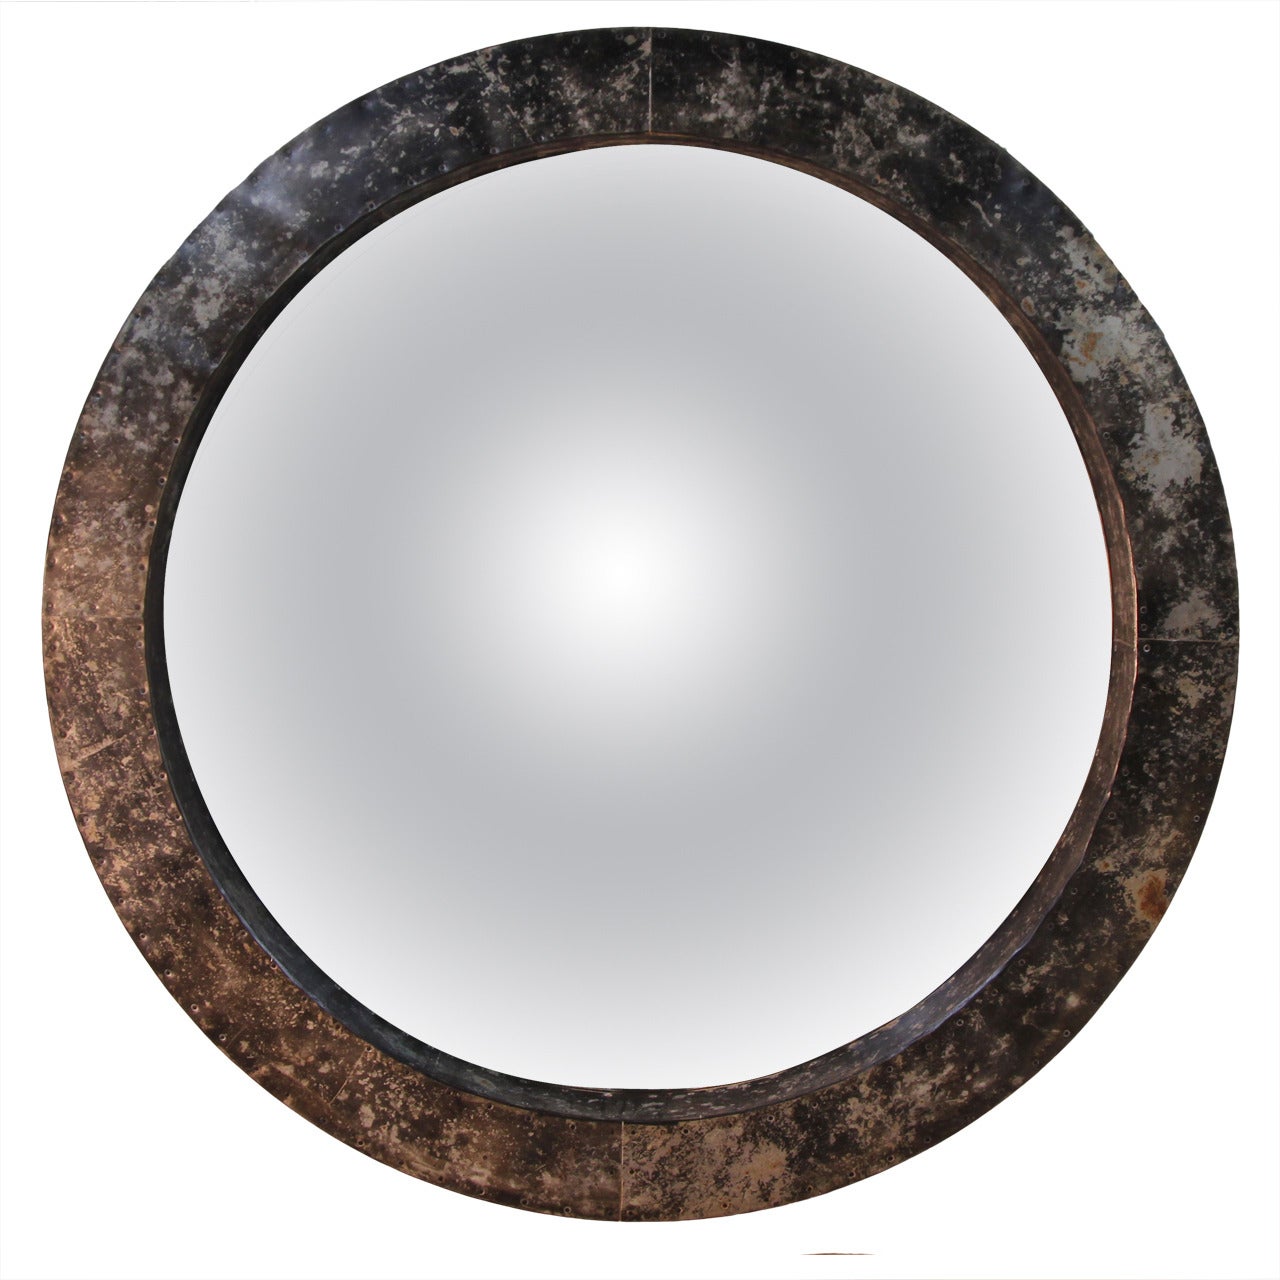 Zinc Convex Mirror by English Artist